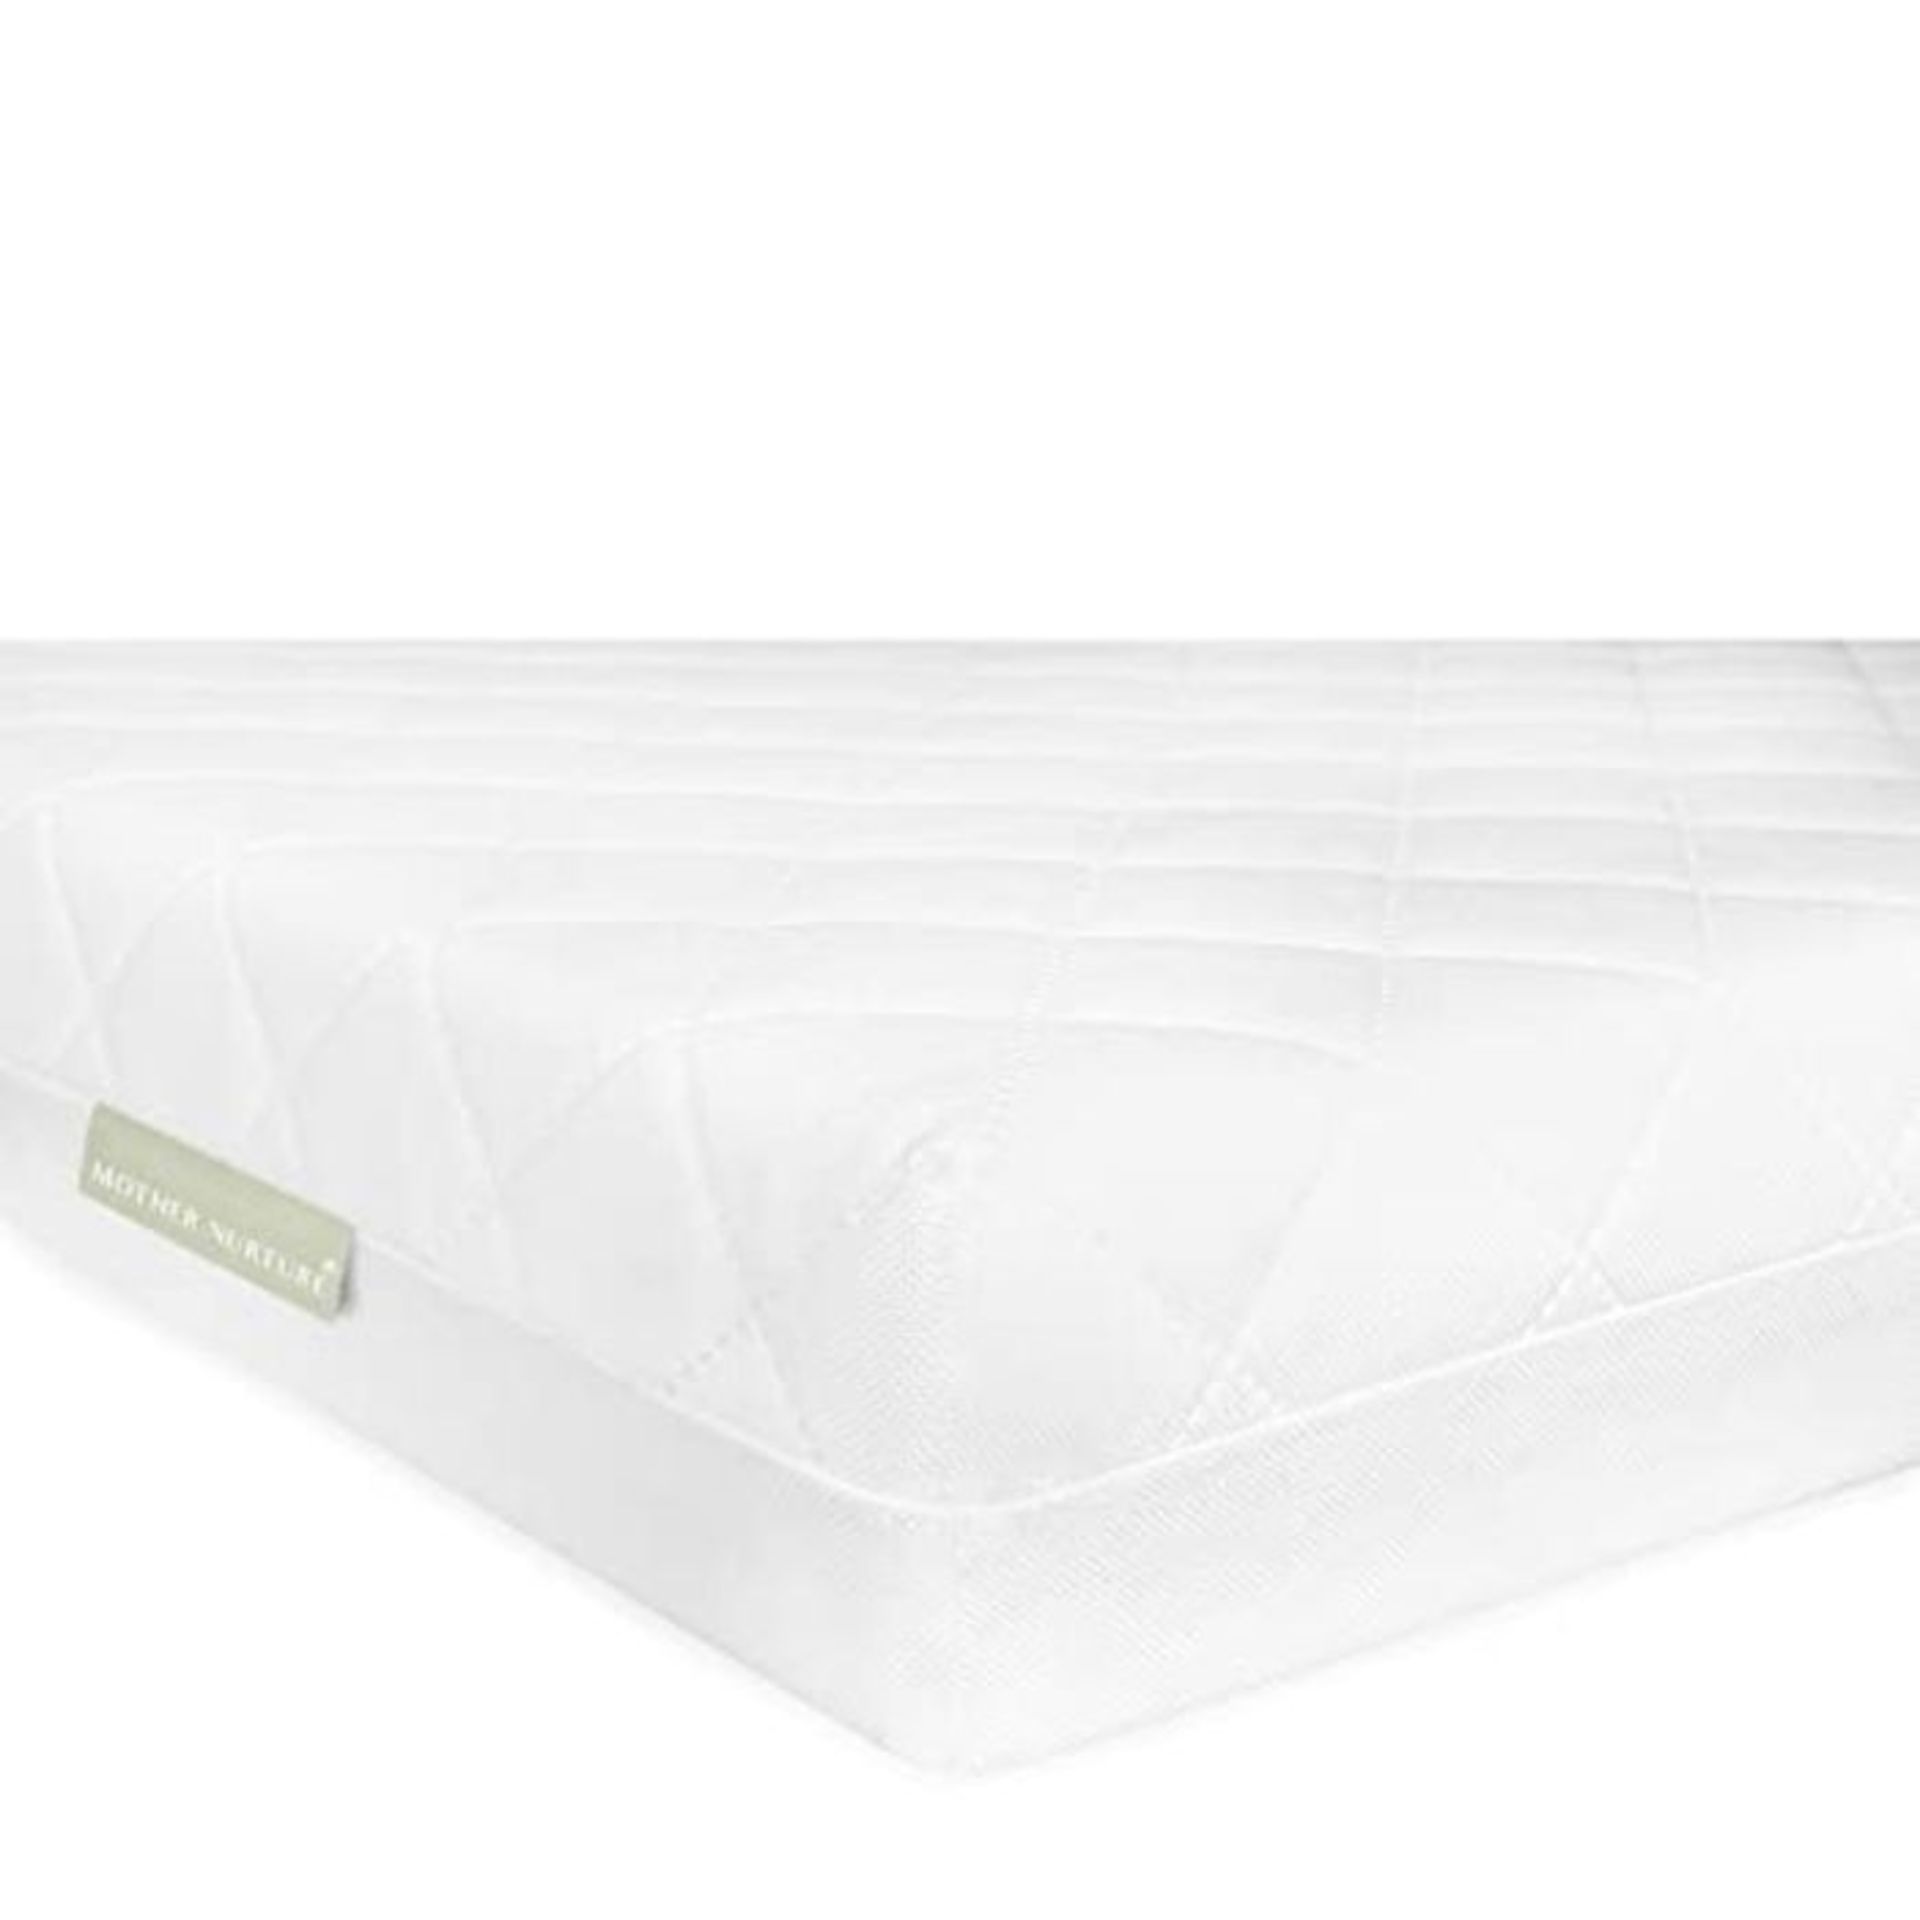 Mother Nurture Classic Eco Fibre Cot Bed Mattress, White, 140 x 70 x 10 cm